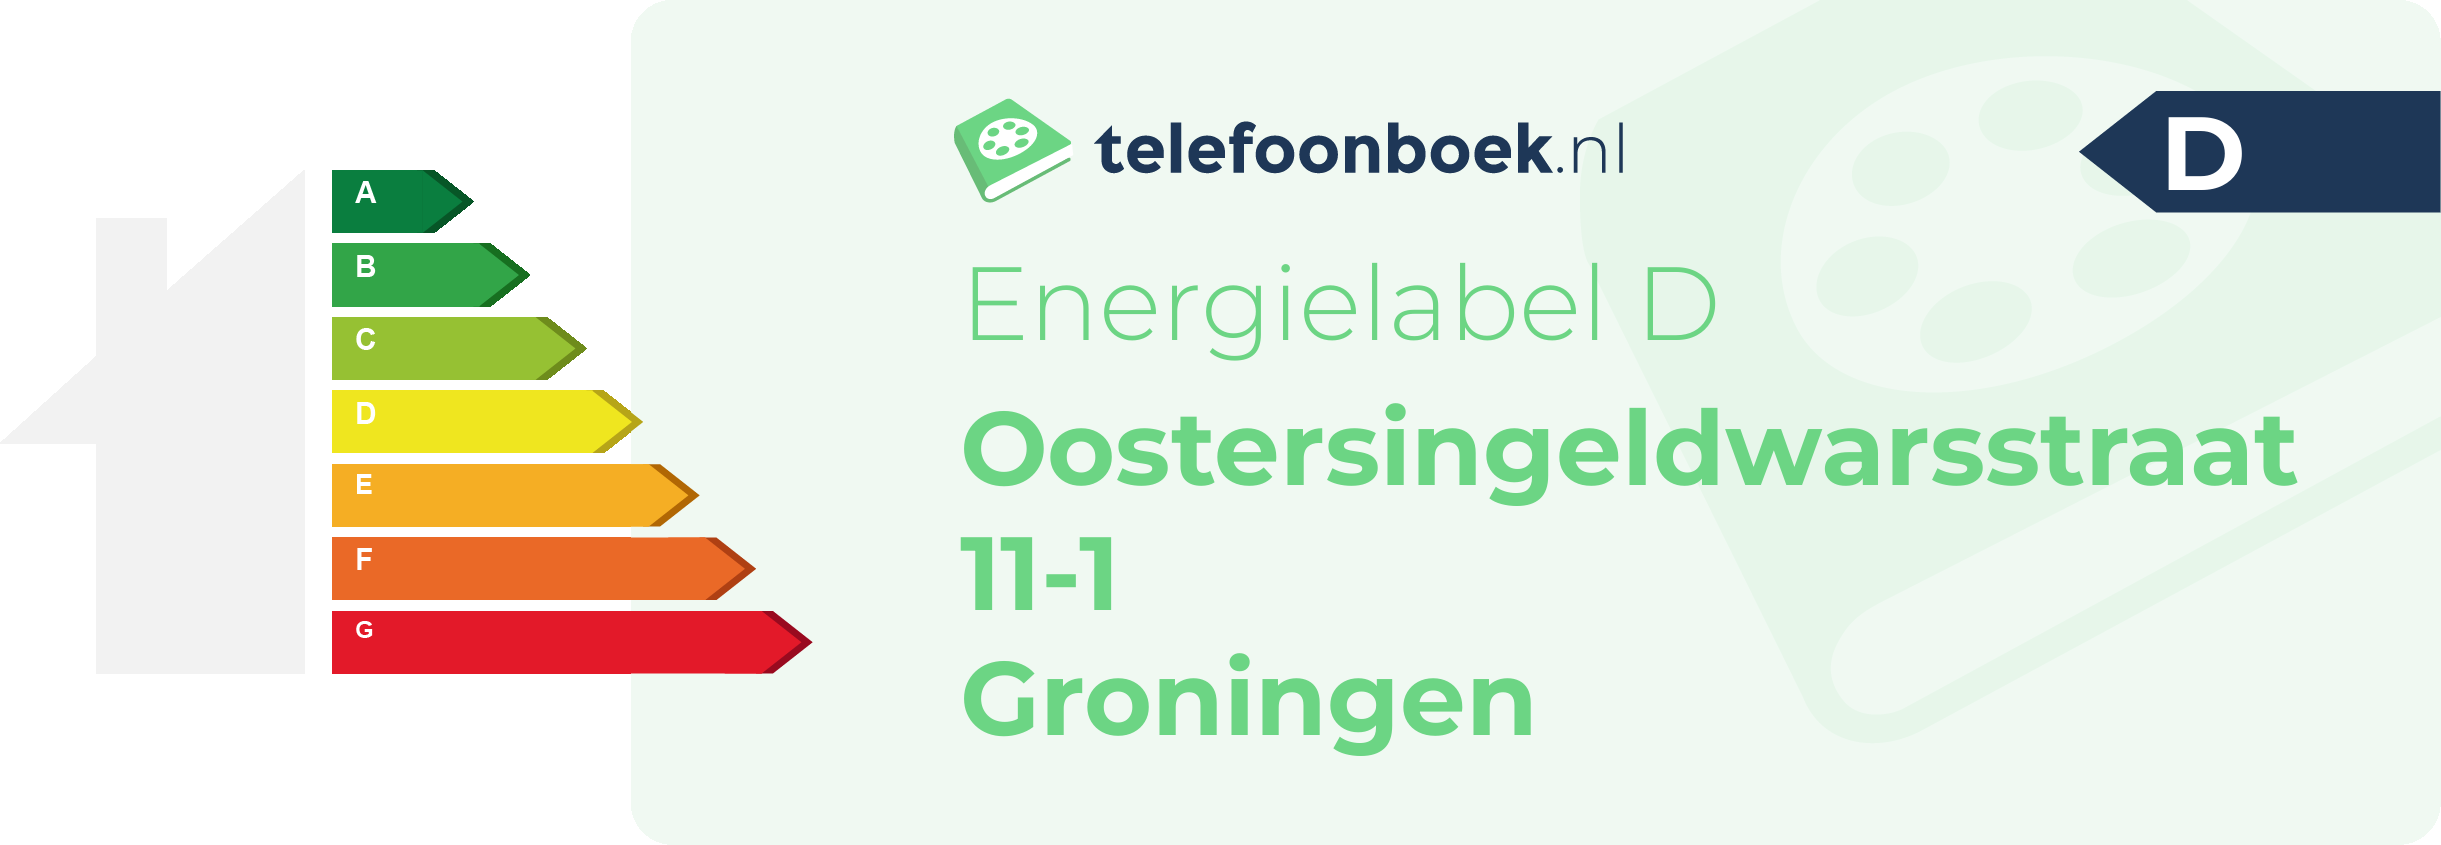 Energielabel Oostersingeldwarsstraat 11-1 Groningen